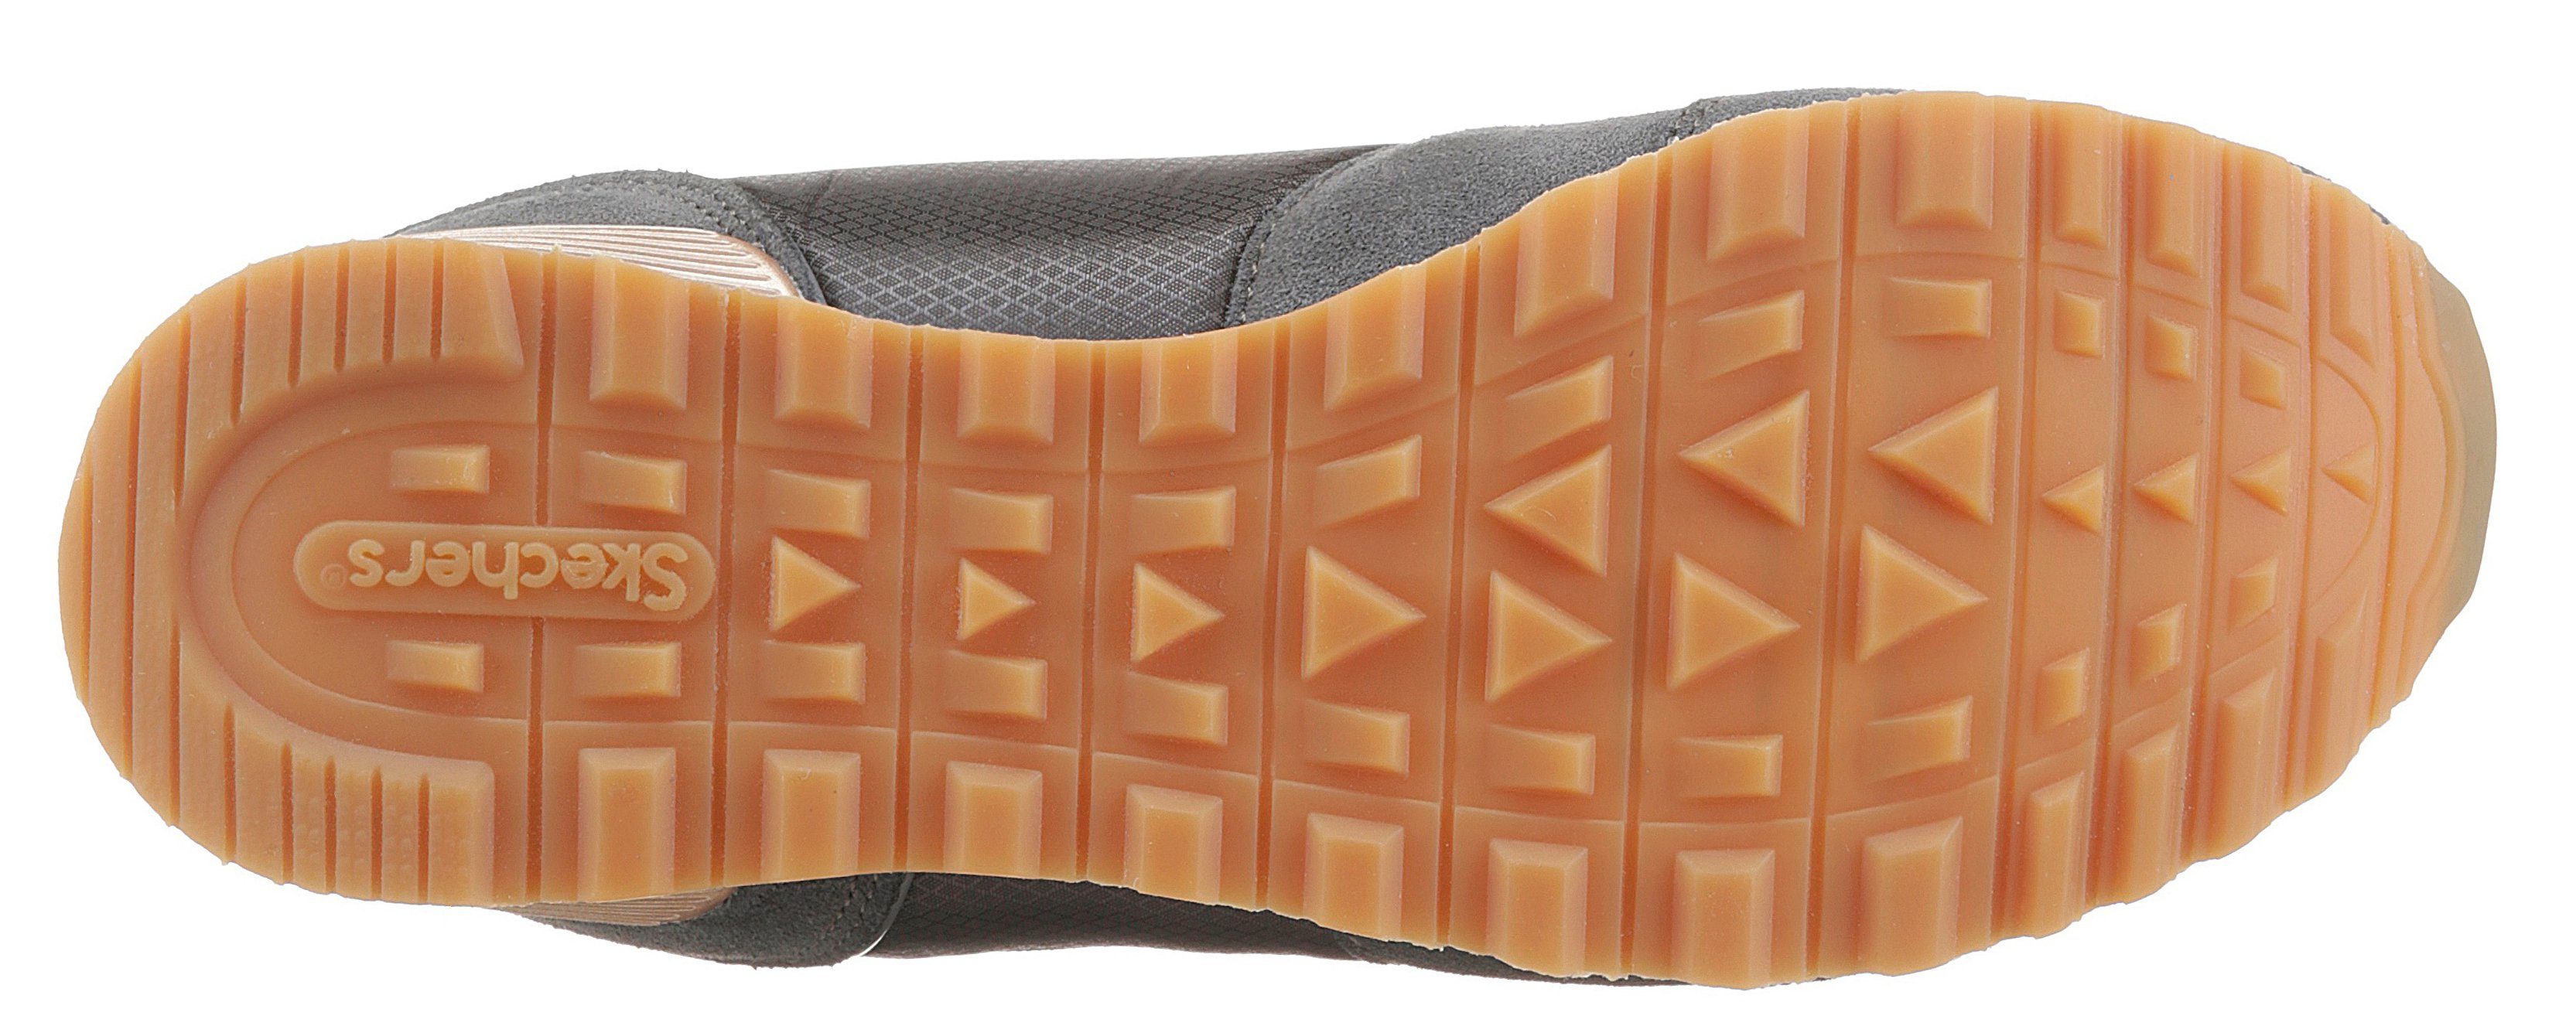 GURL Foam komfortabler OG Air-Cooled Skechers Memory Ausstattung mit Sneaker 85 GOLDN grau -